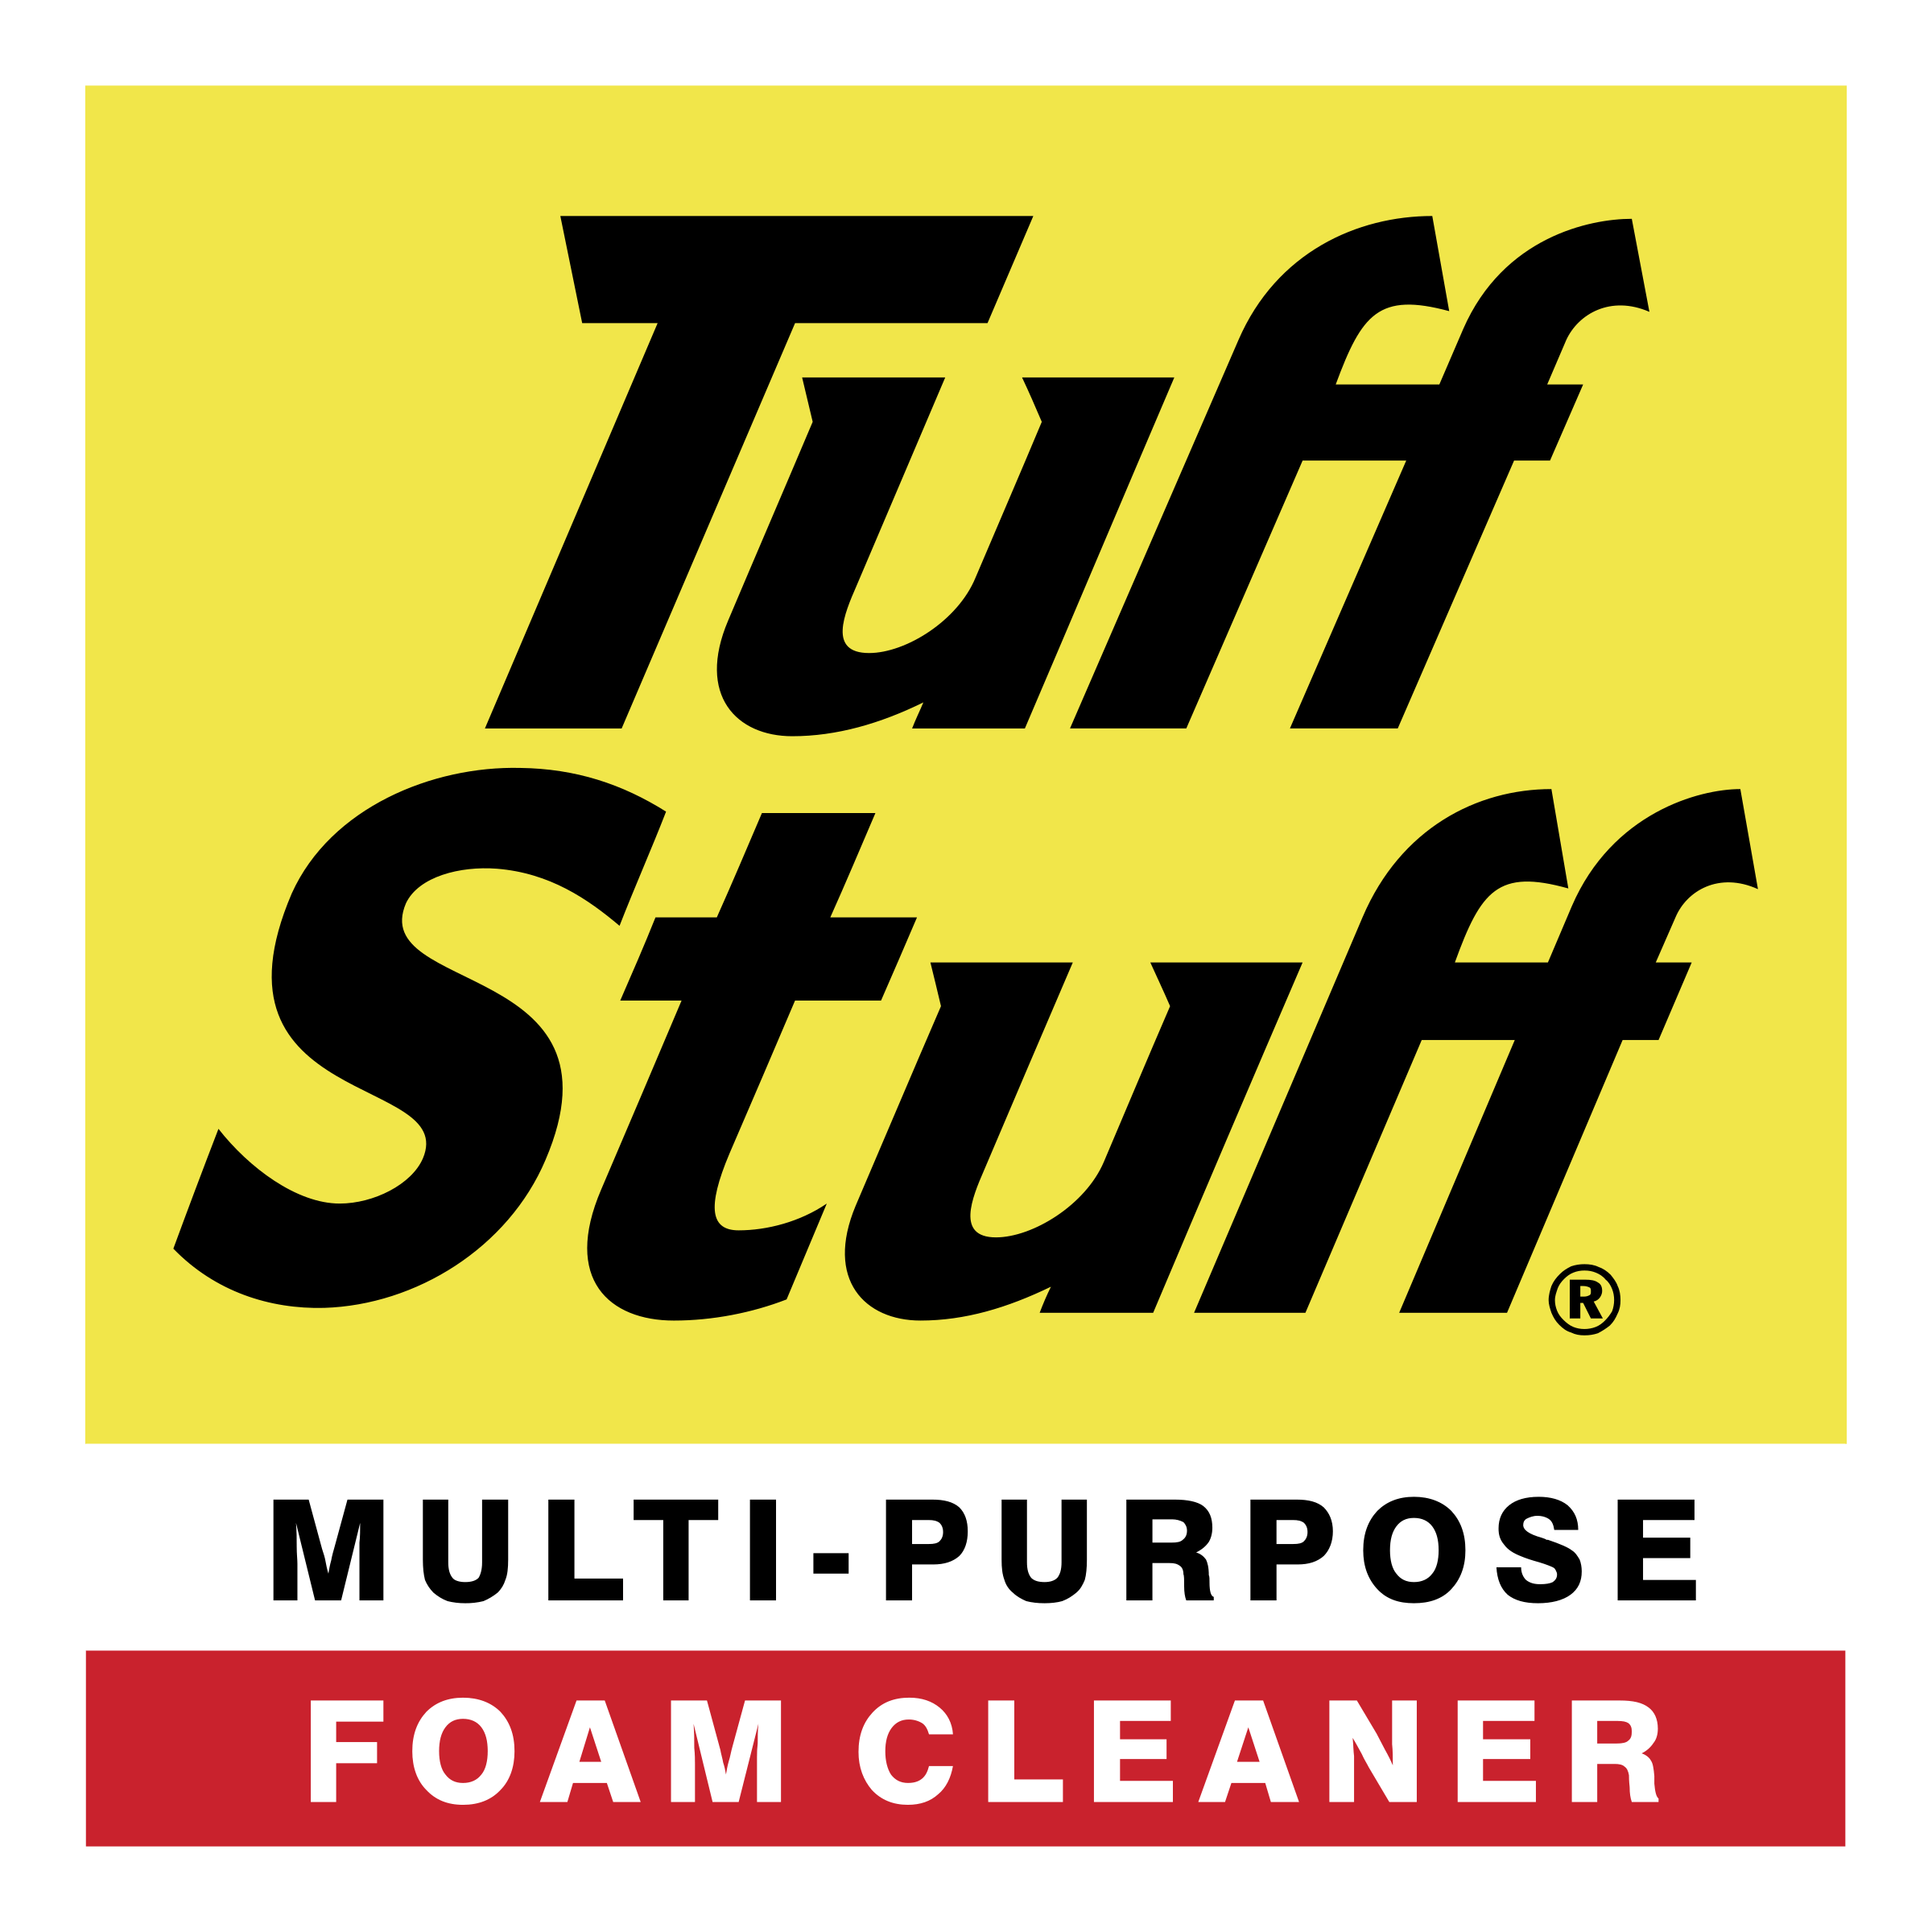 Tuff Logo - Tuff Stuff Logo PNG Transparent & SVG Vector - Freebie Supply